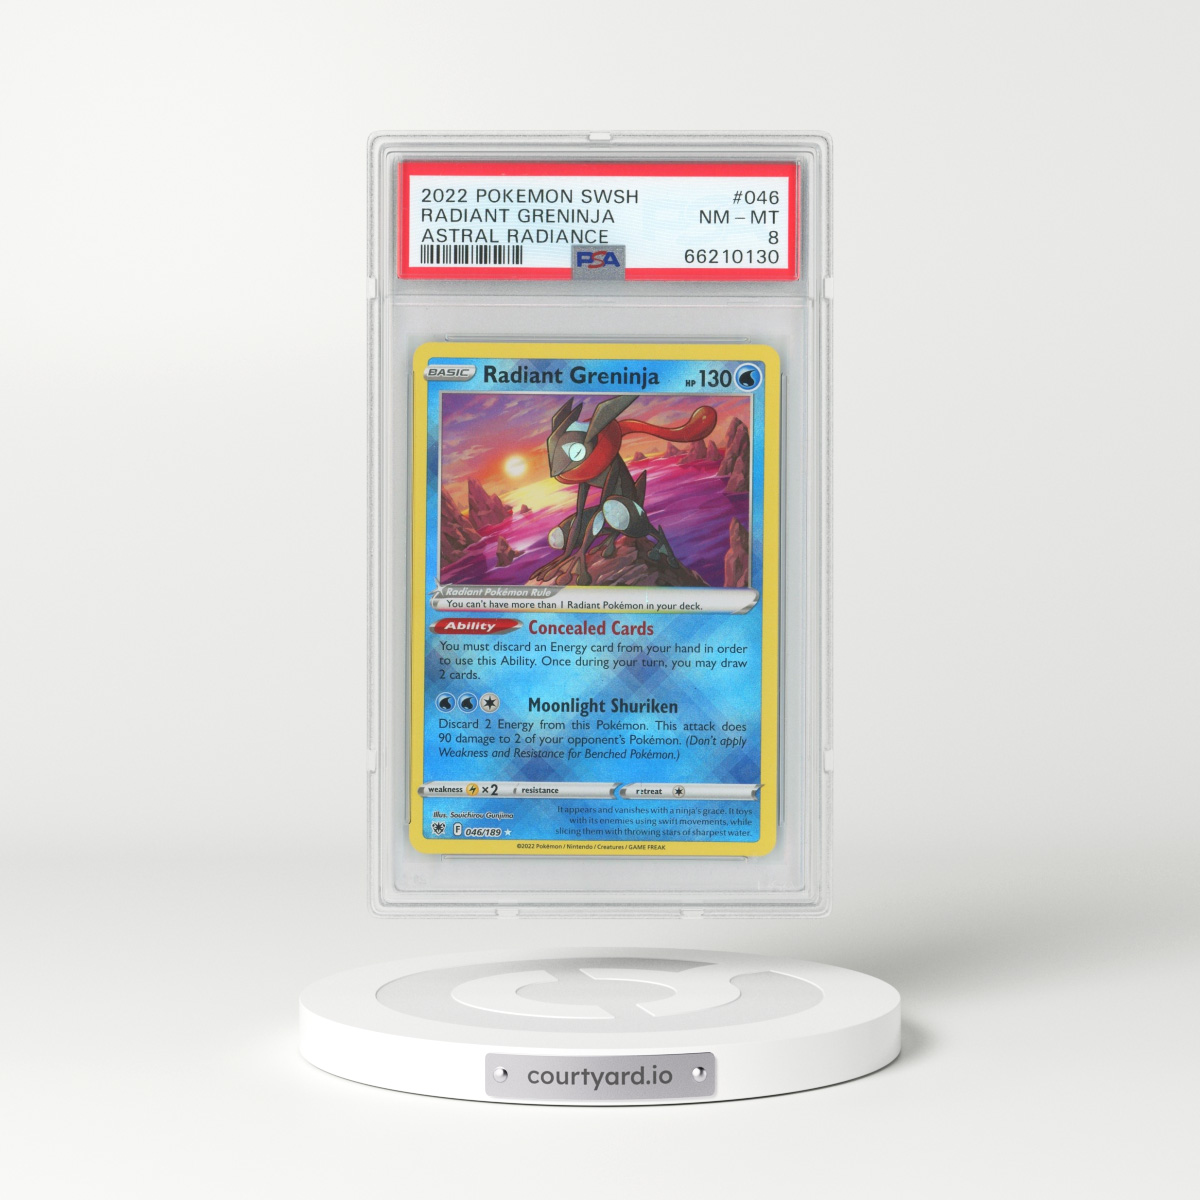 PSA 10 Leafeon LV.X Holo 1st Edition Dawn Dash 2007 Pokemon Cards